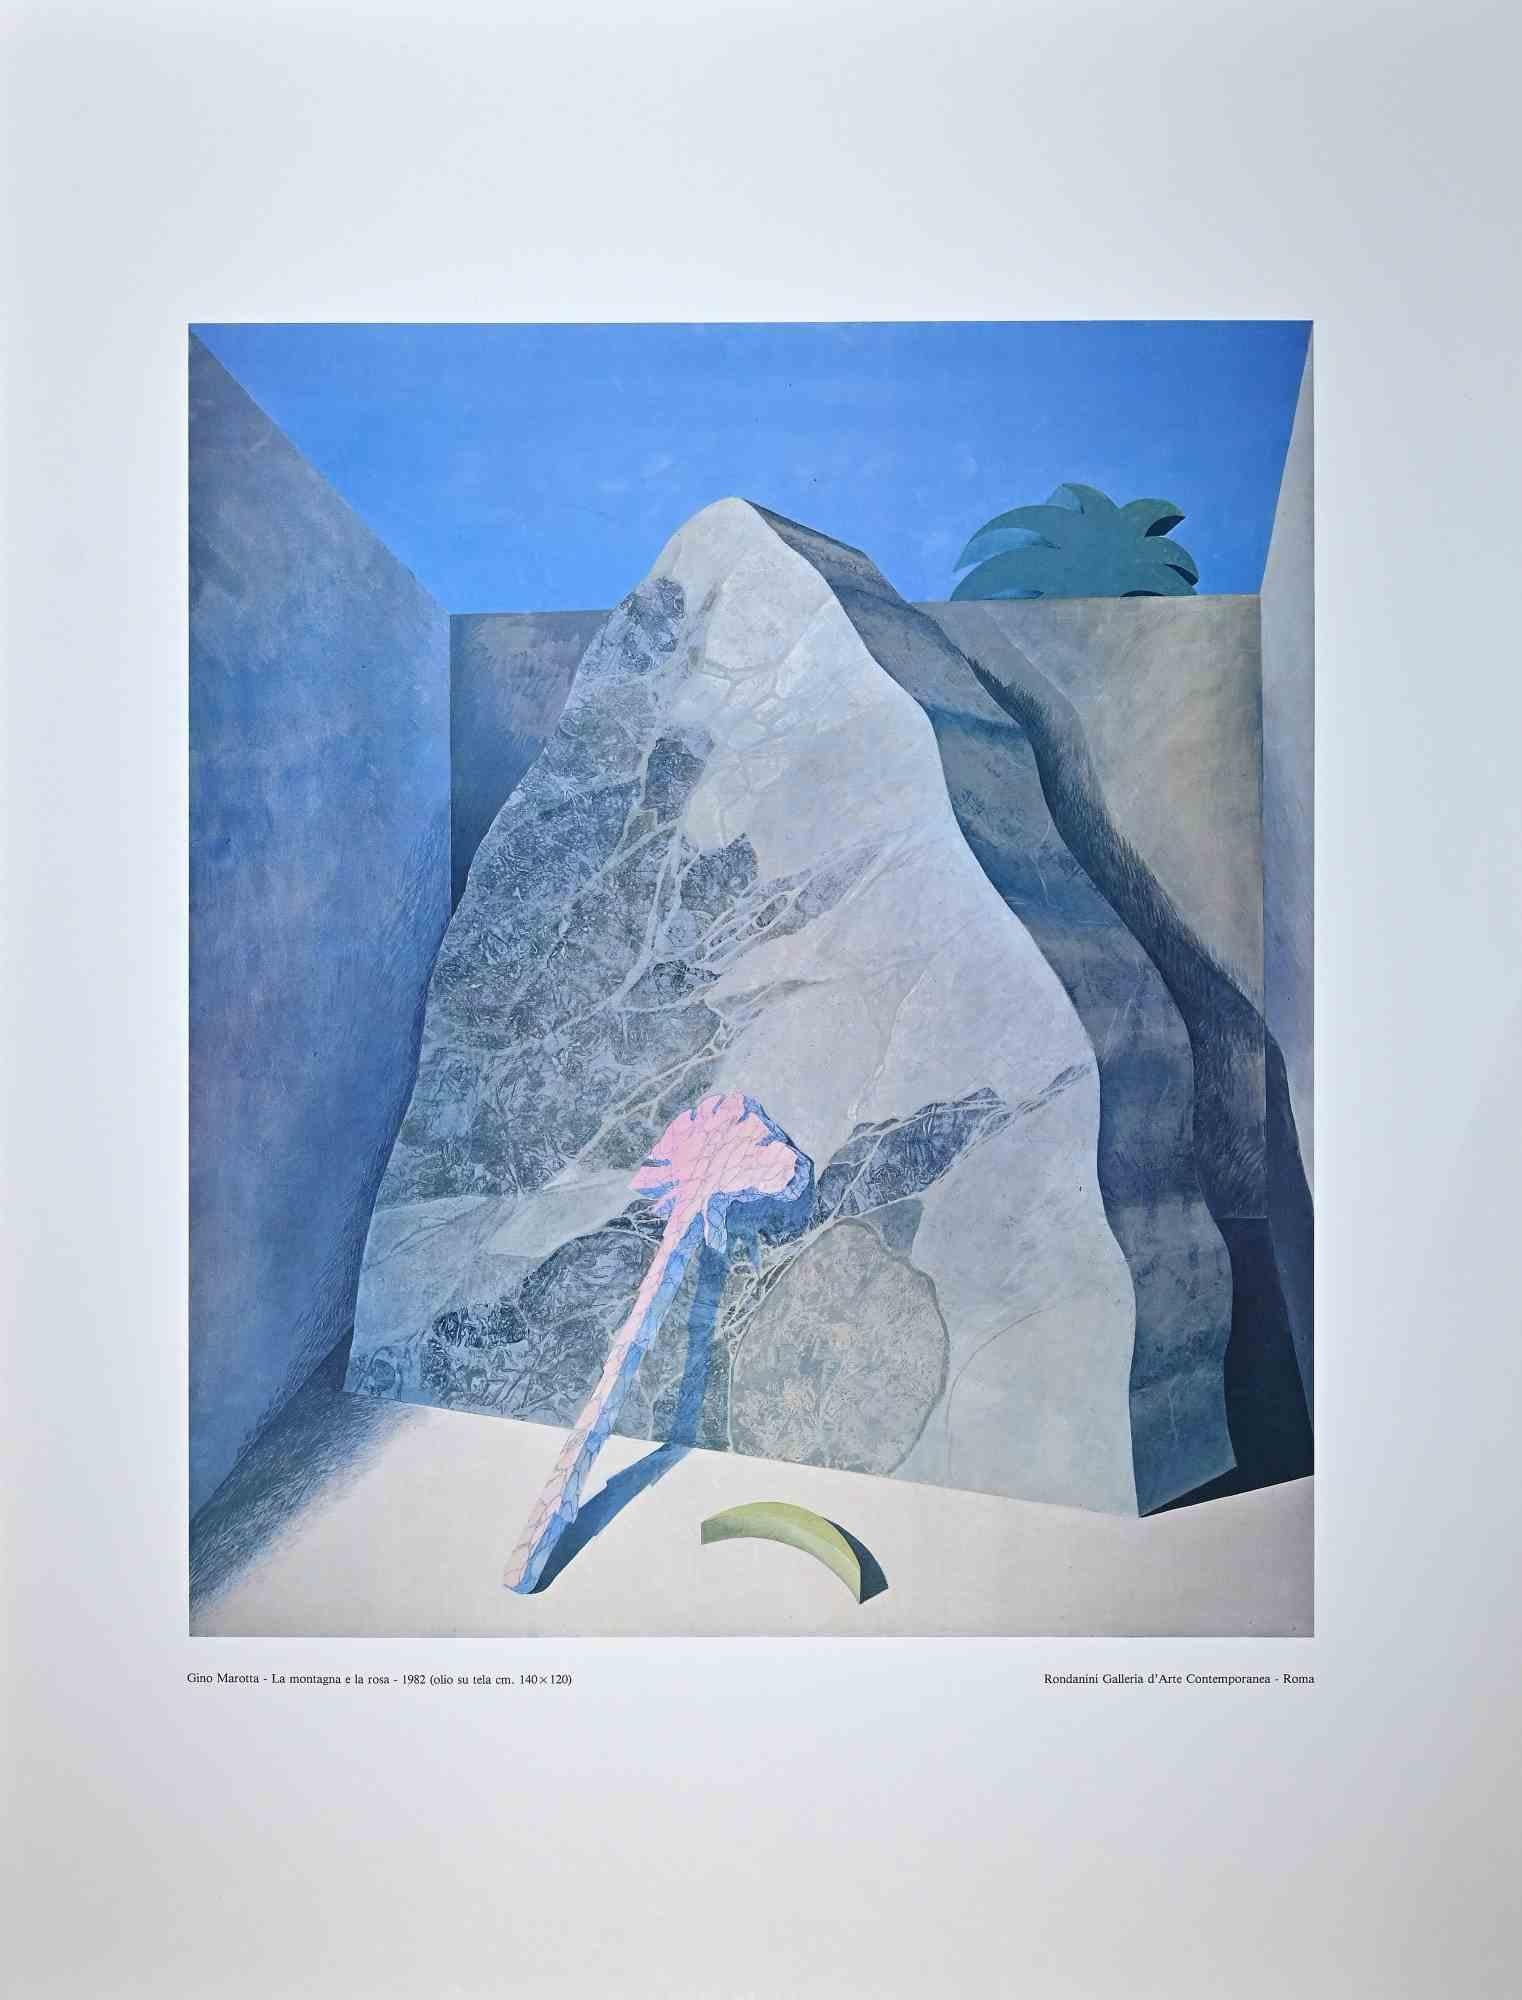 Figurative Print Gino Marotta - The Mountain and the Rose (La montagne et la rose) - Affiche vintage d'après G. Marotta - 1982